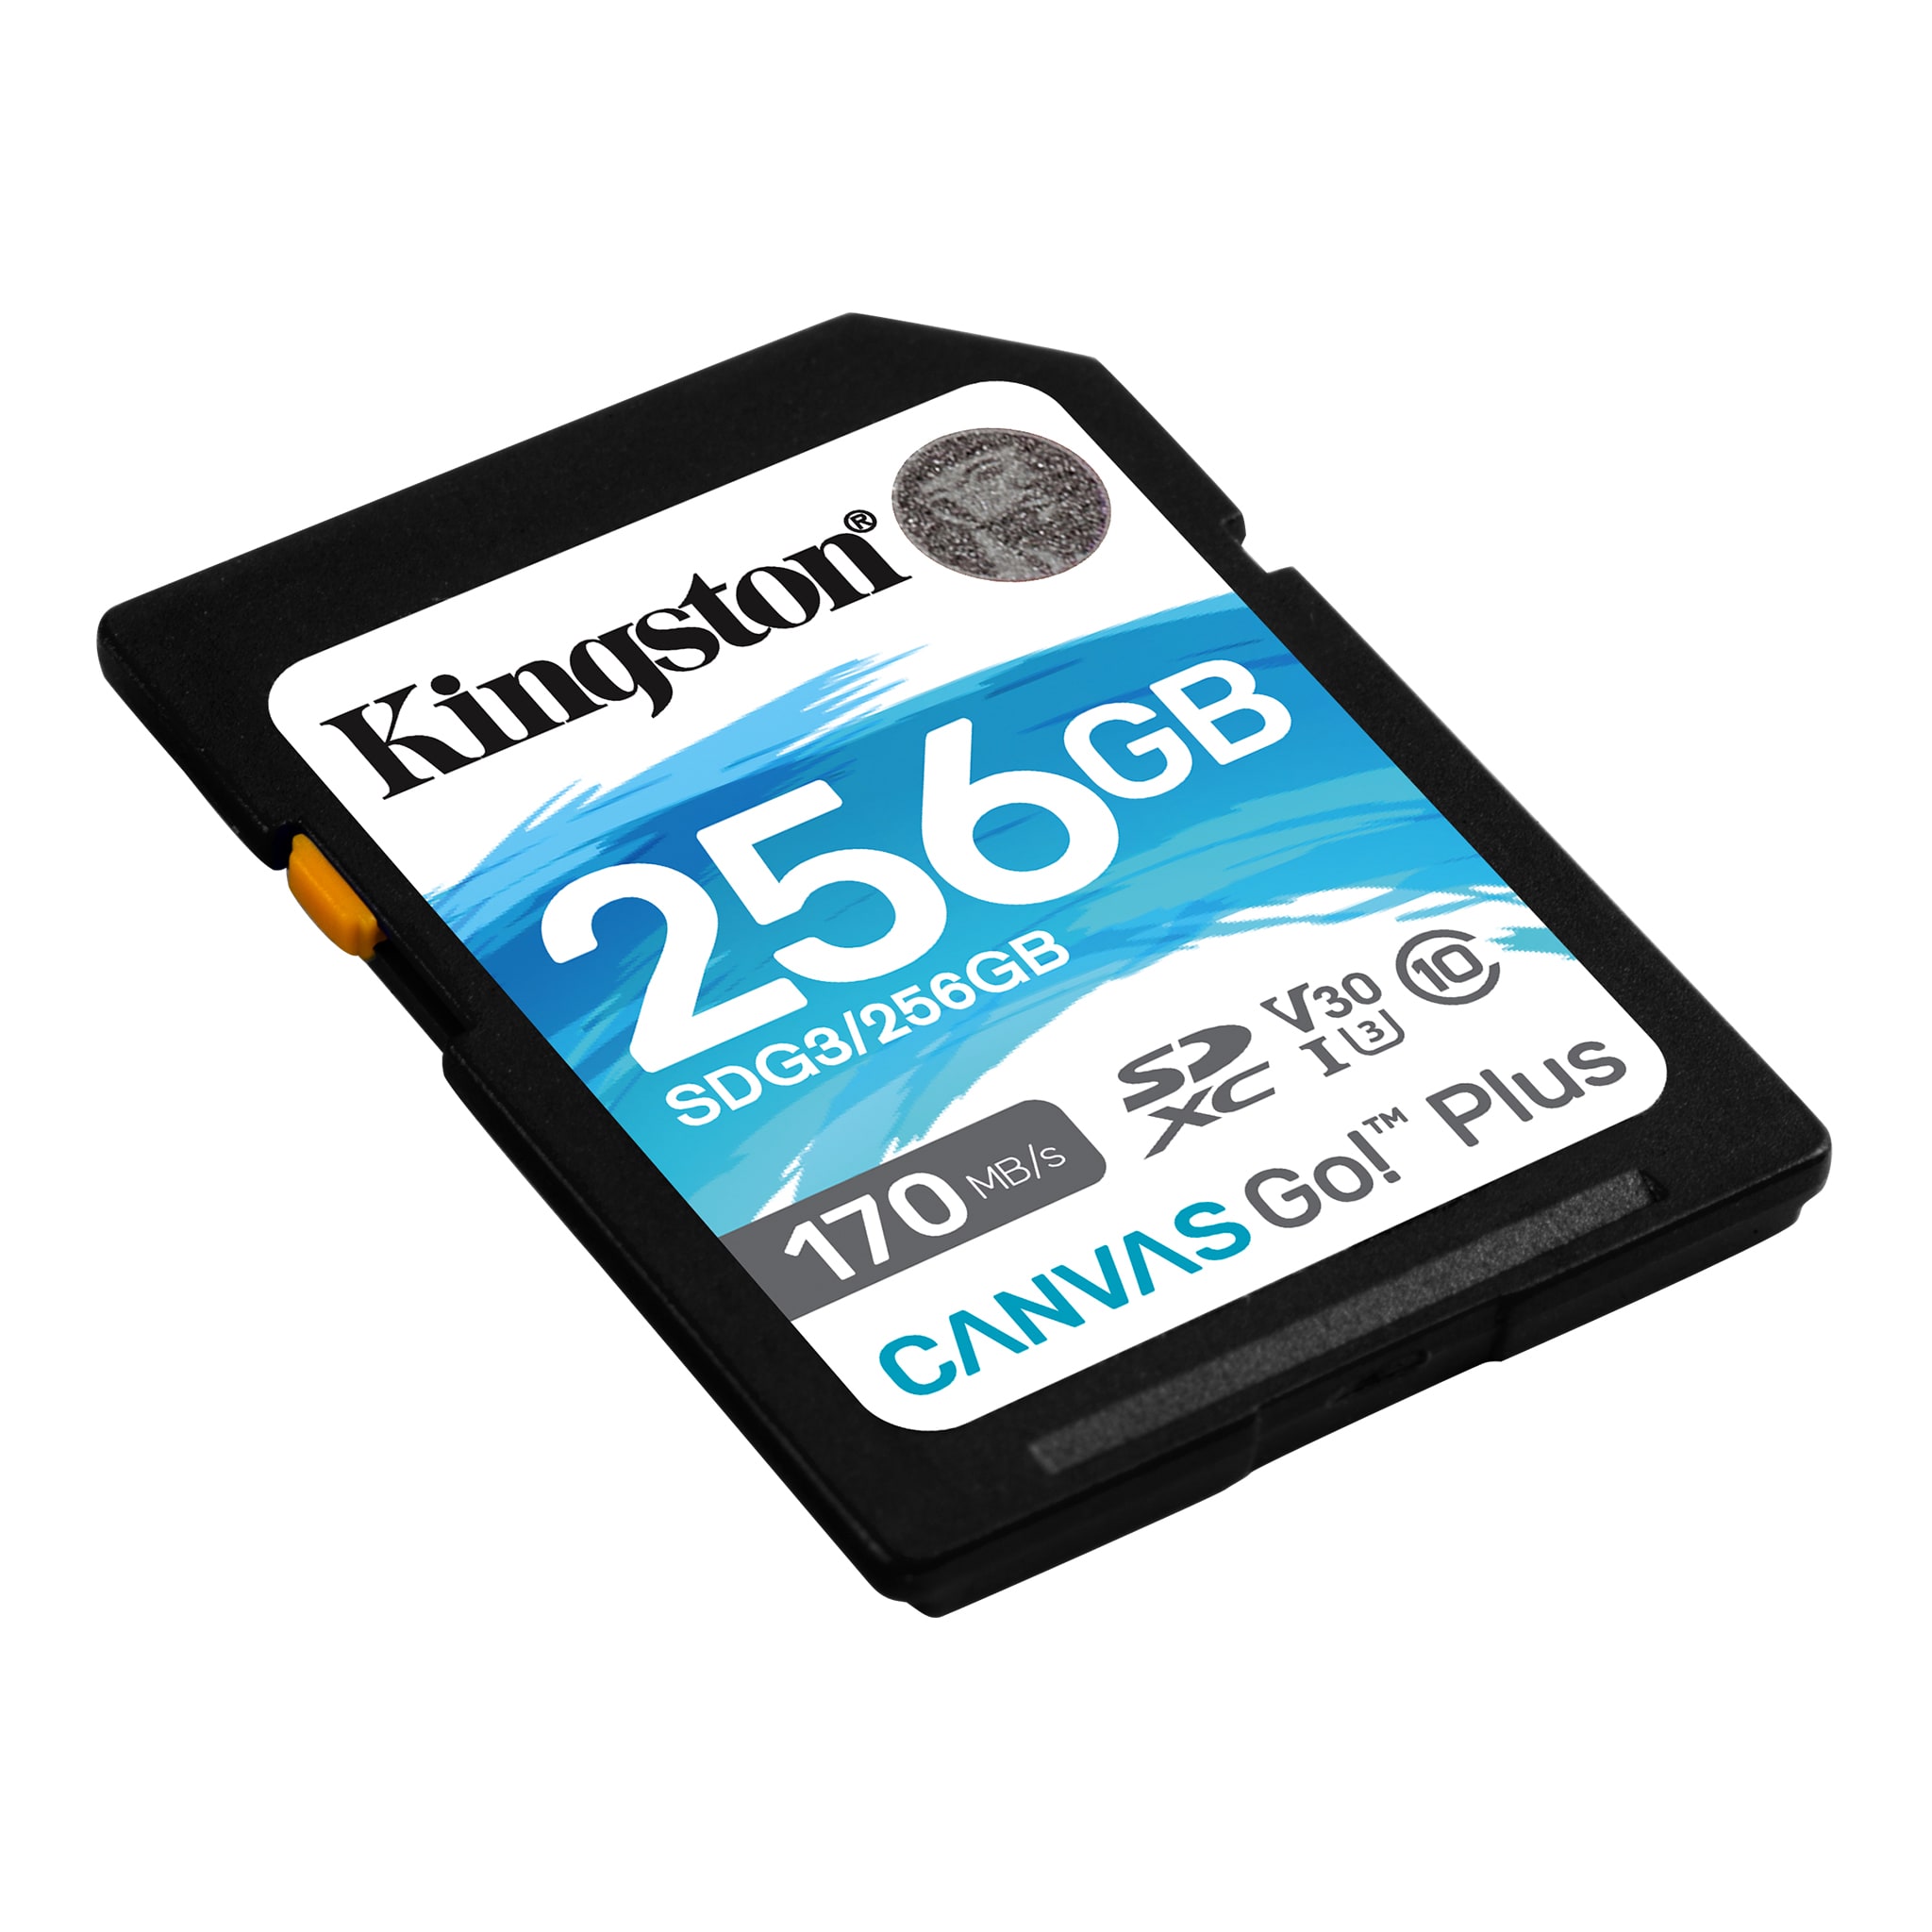 100MBs Works with Kingston Kingston 64GB Huawei nova 3 MicroSDXC Canvas Select Plus Card Verified by SanFlash. 